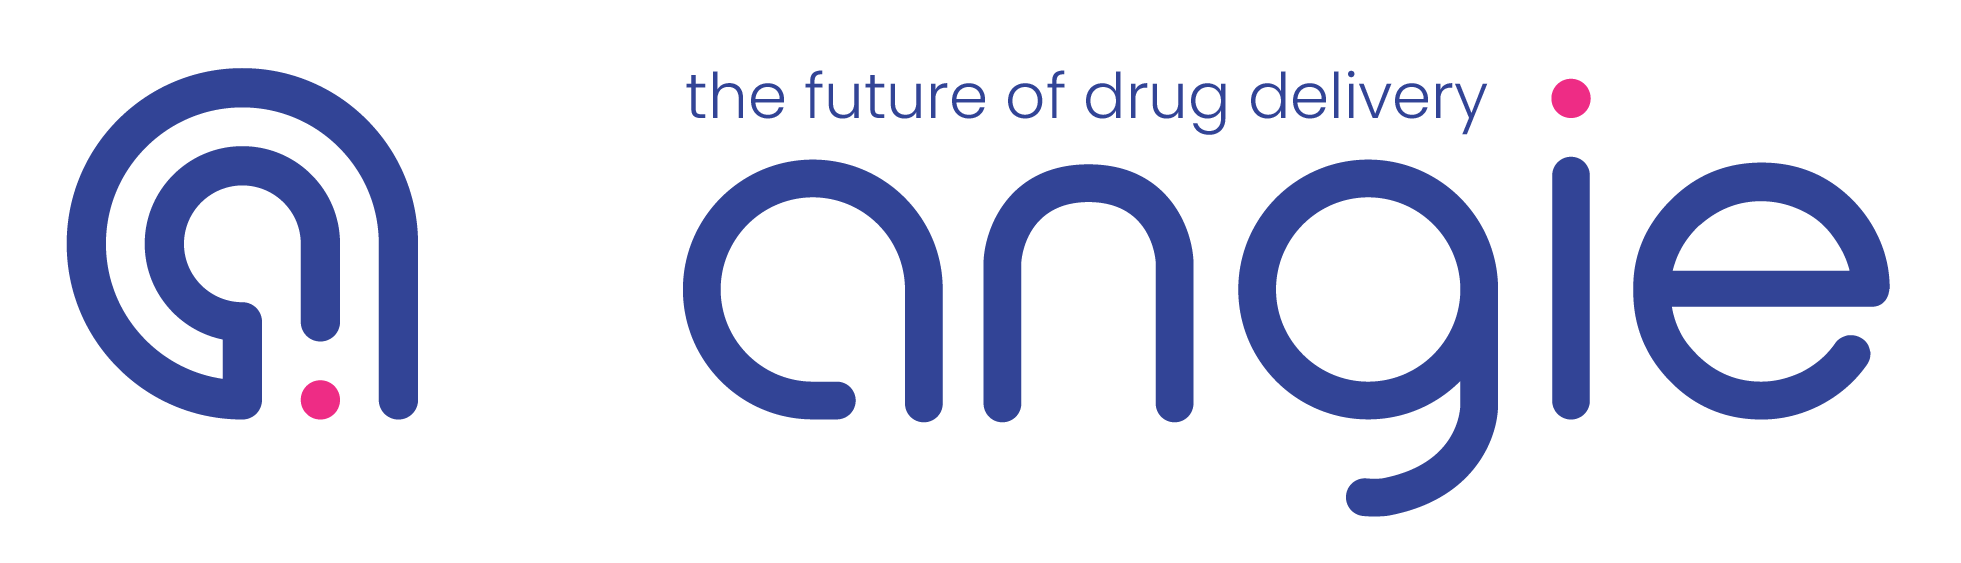 Emerging issues on targeted drug delivery – event 28 November 2022